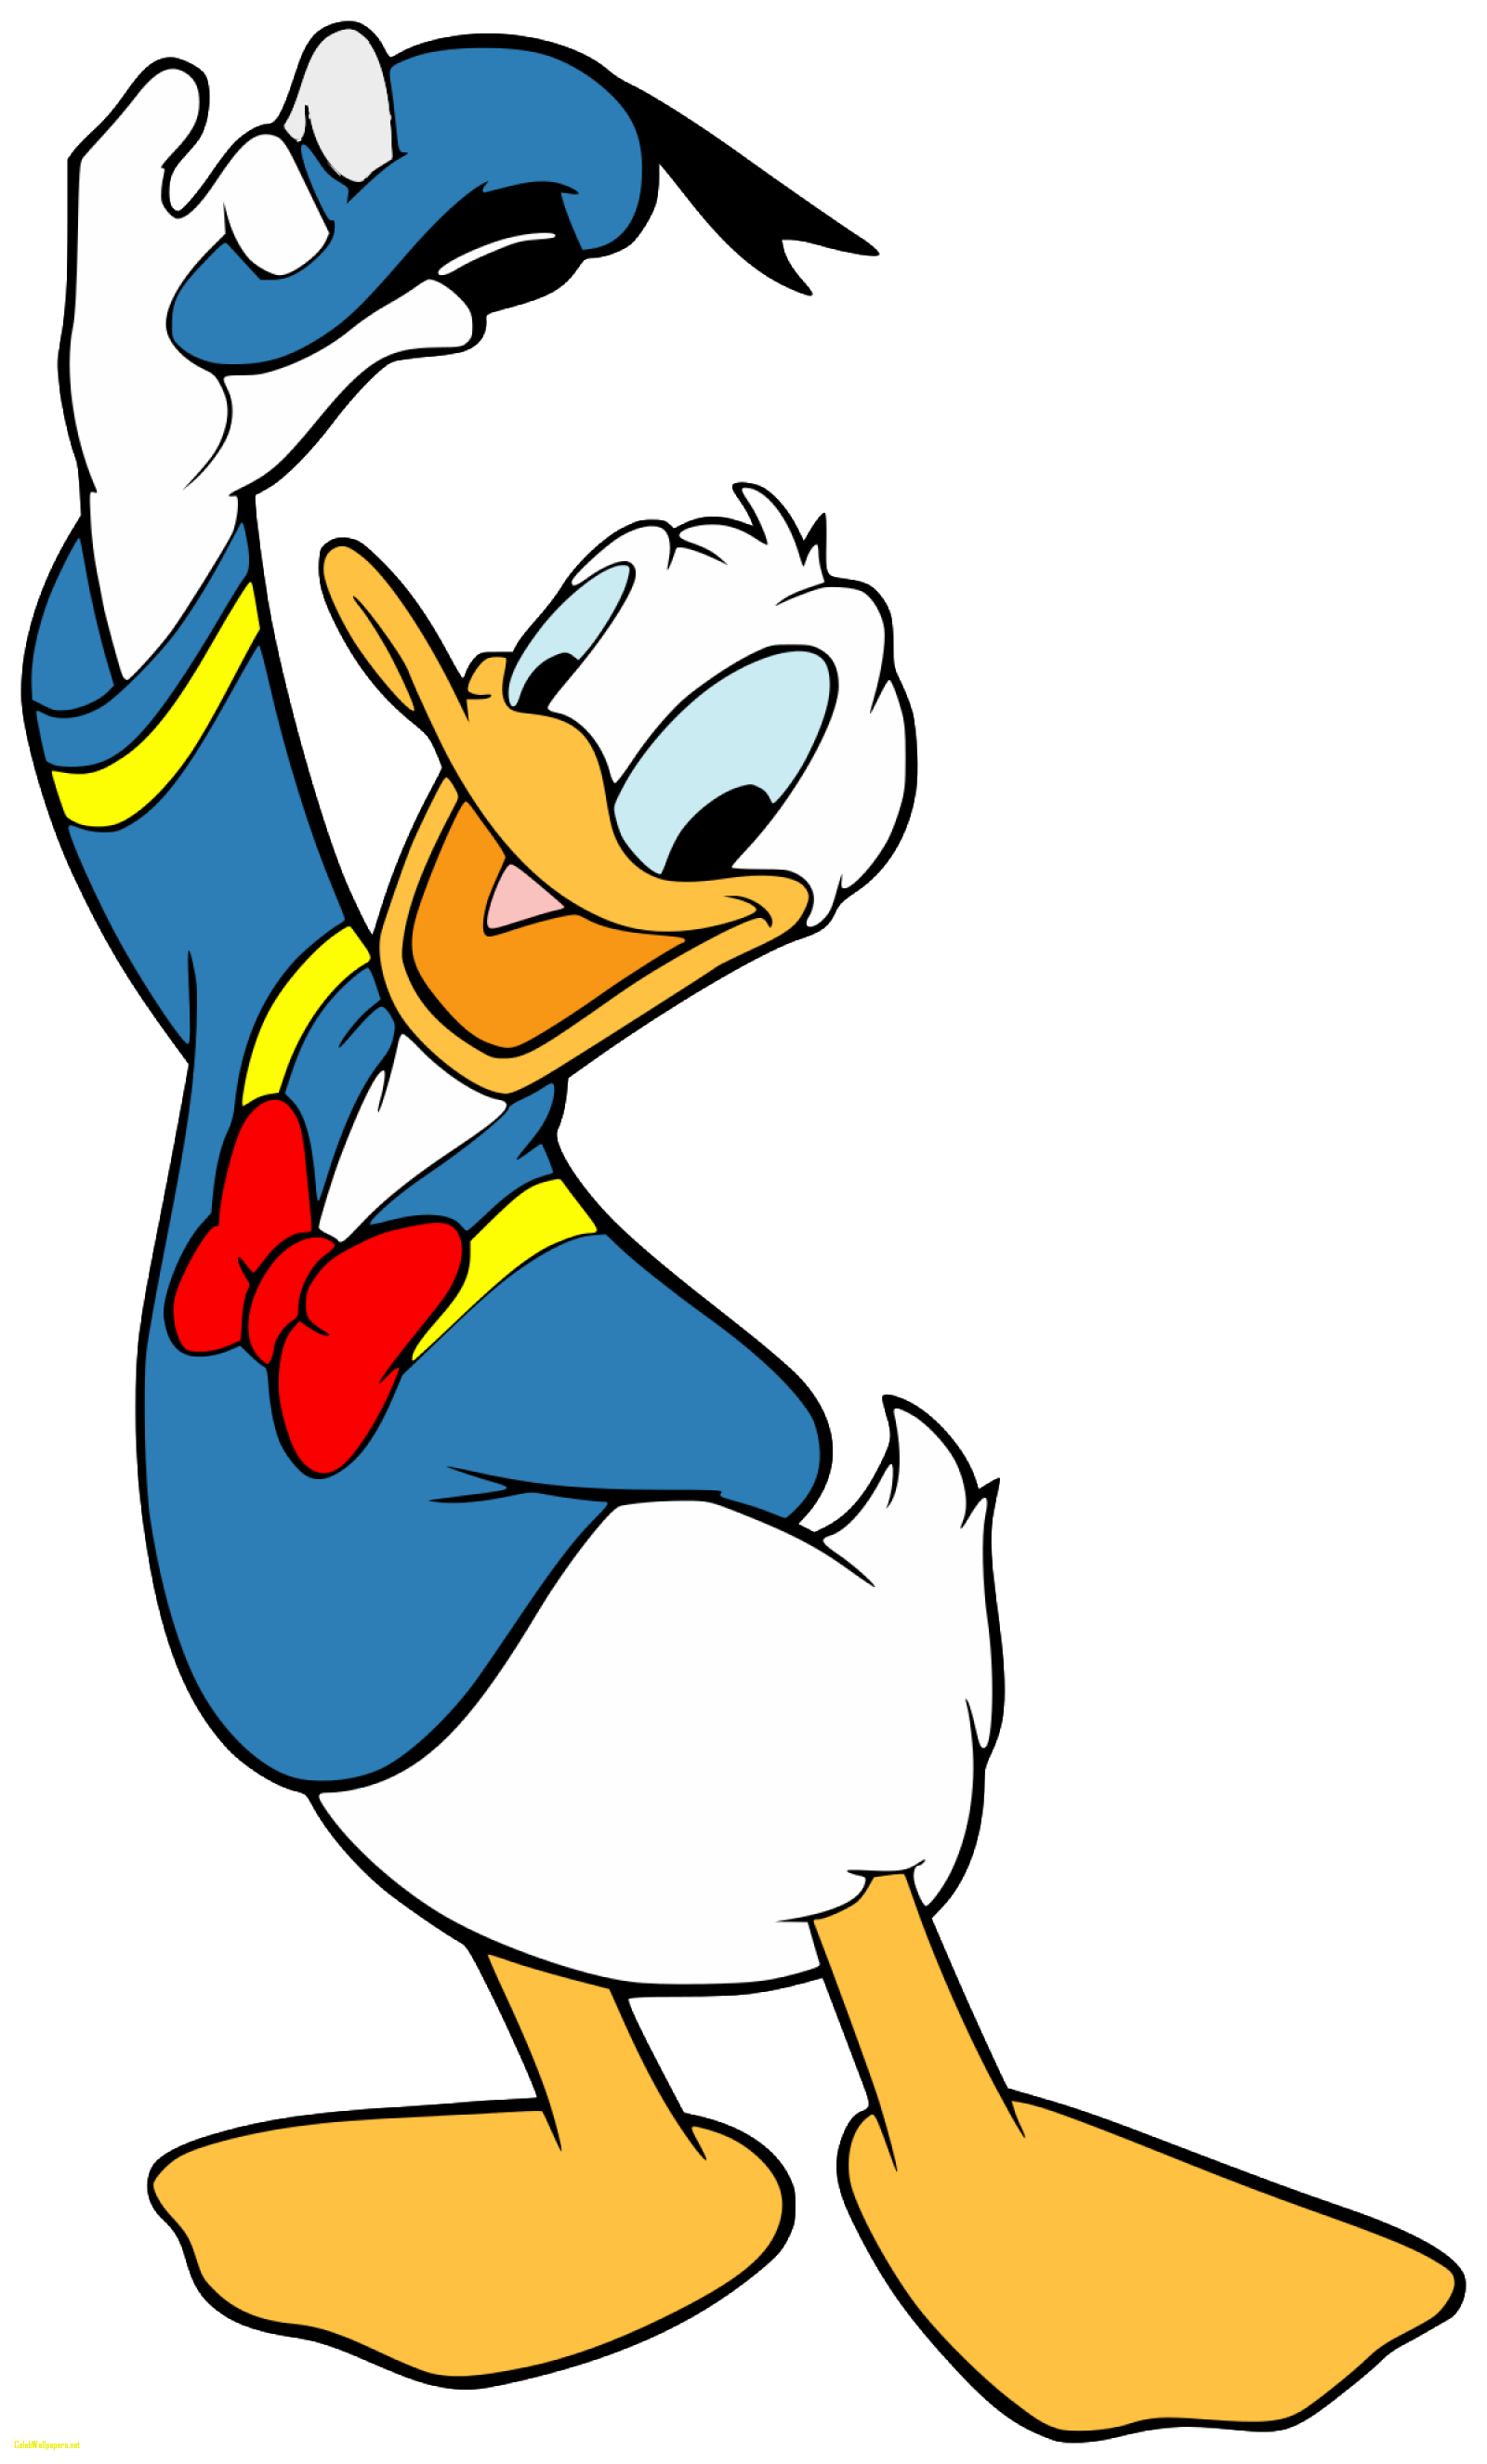 Ducks clipart dack. Donald duck images ics